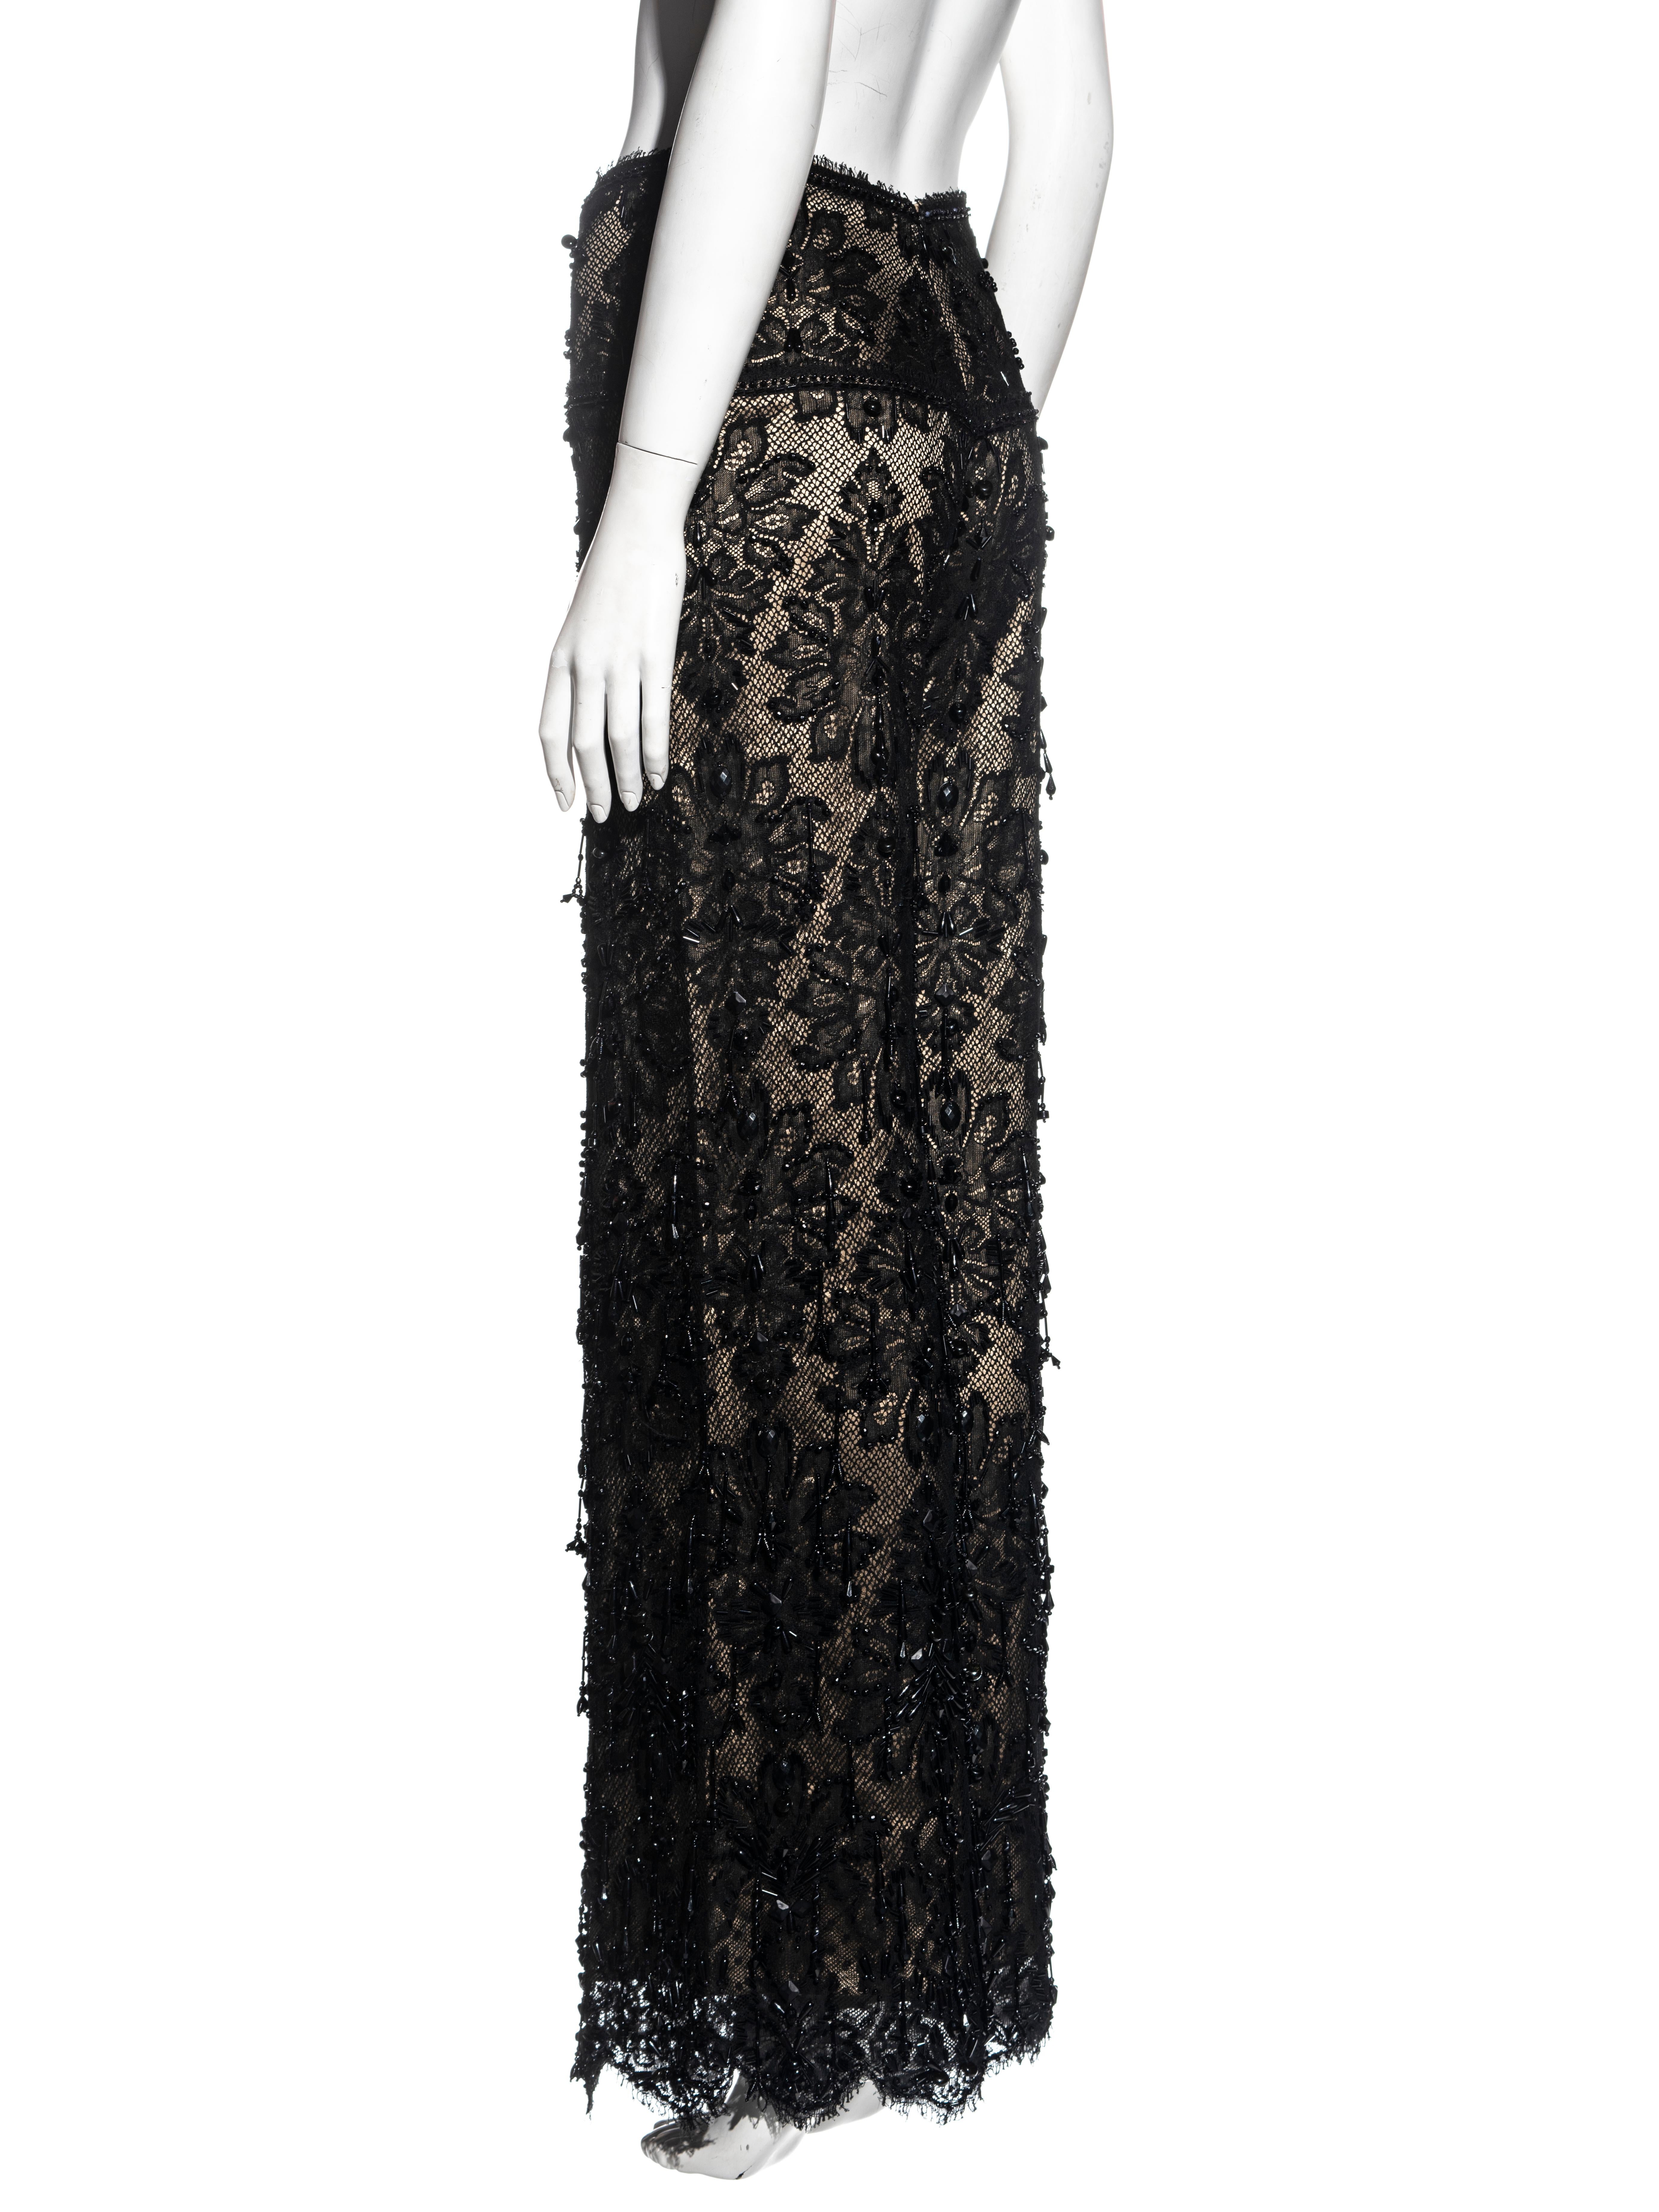 Women's Gianfranco Ferré black beaded lace evening pants, ss 2002 For Sale